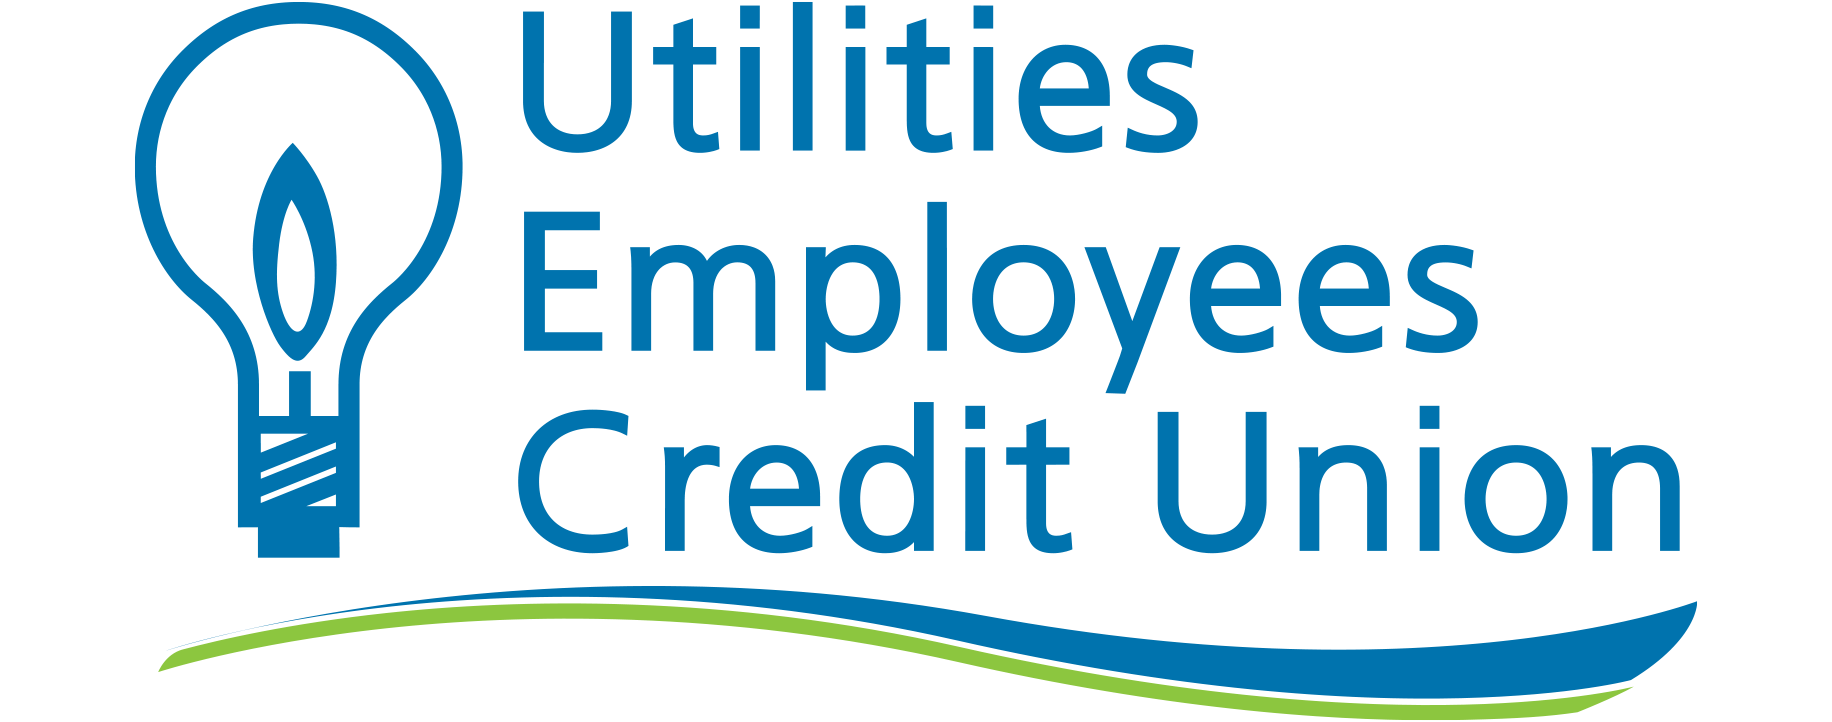 Utilities Employees Credit Union logo with lightbulb